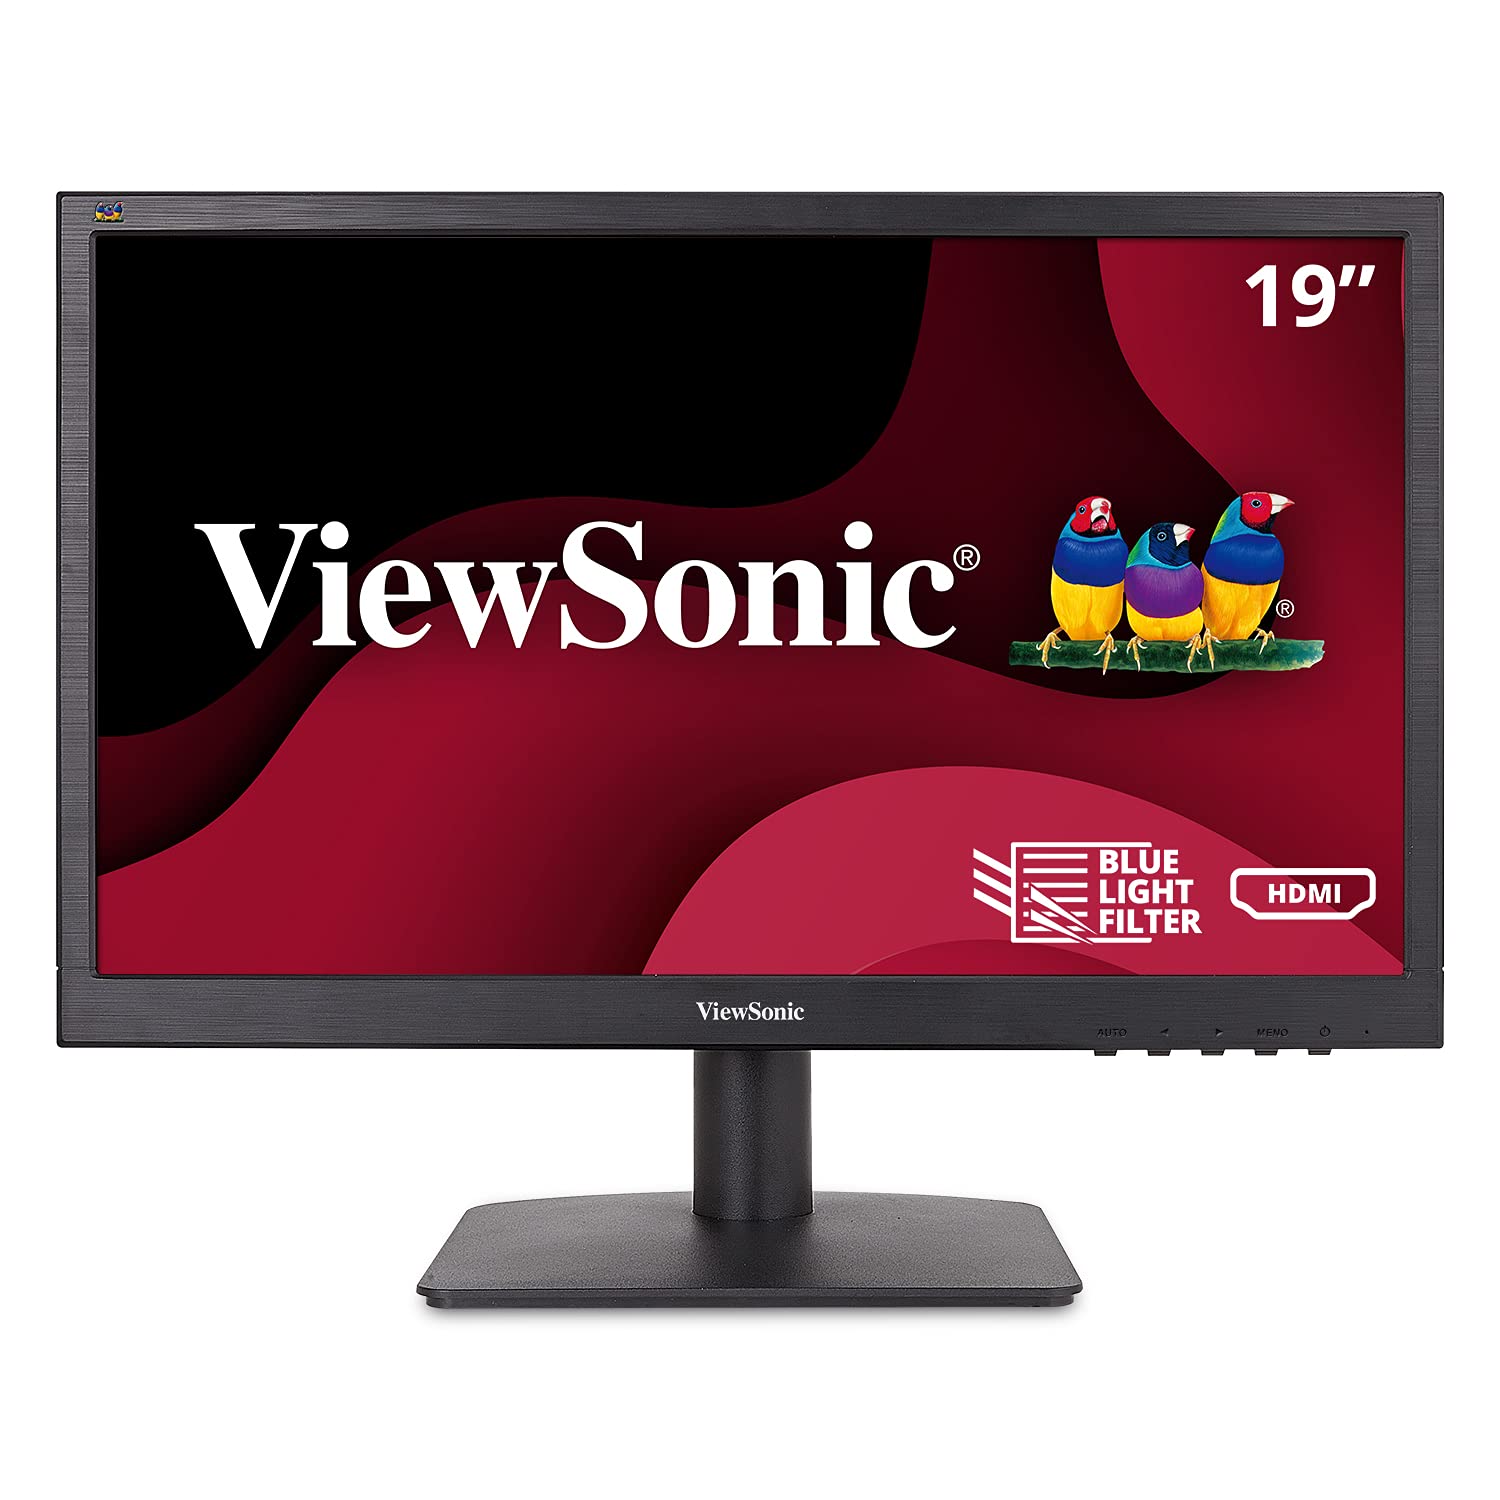 Viewsonic VA1903H 19 インチ WXGA 1366x768p 16:9 ワイドスクリーン モ...